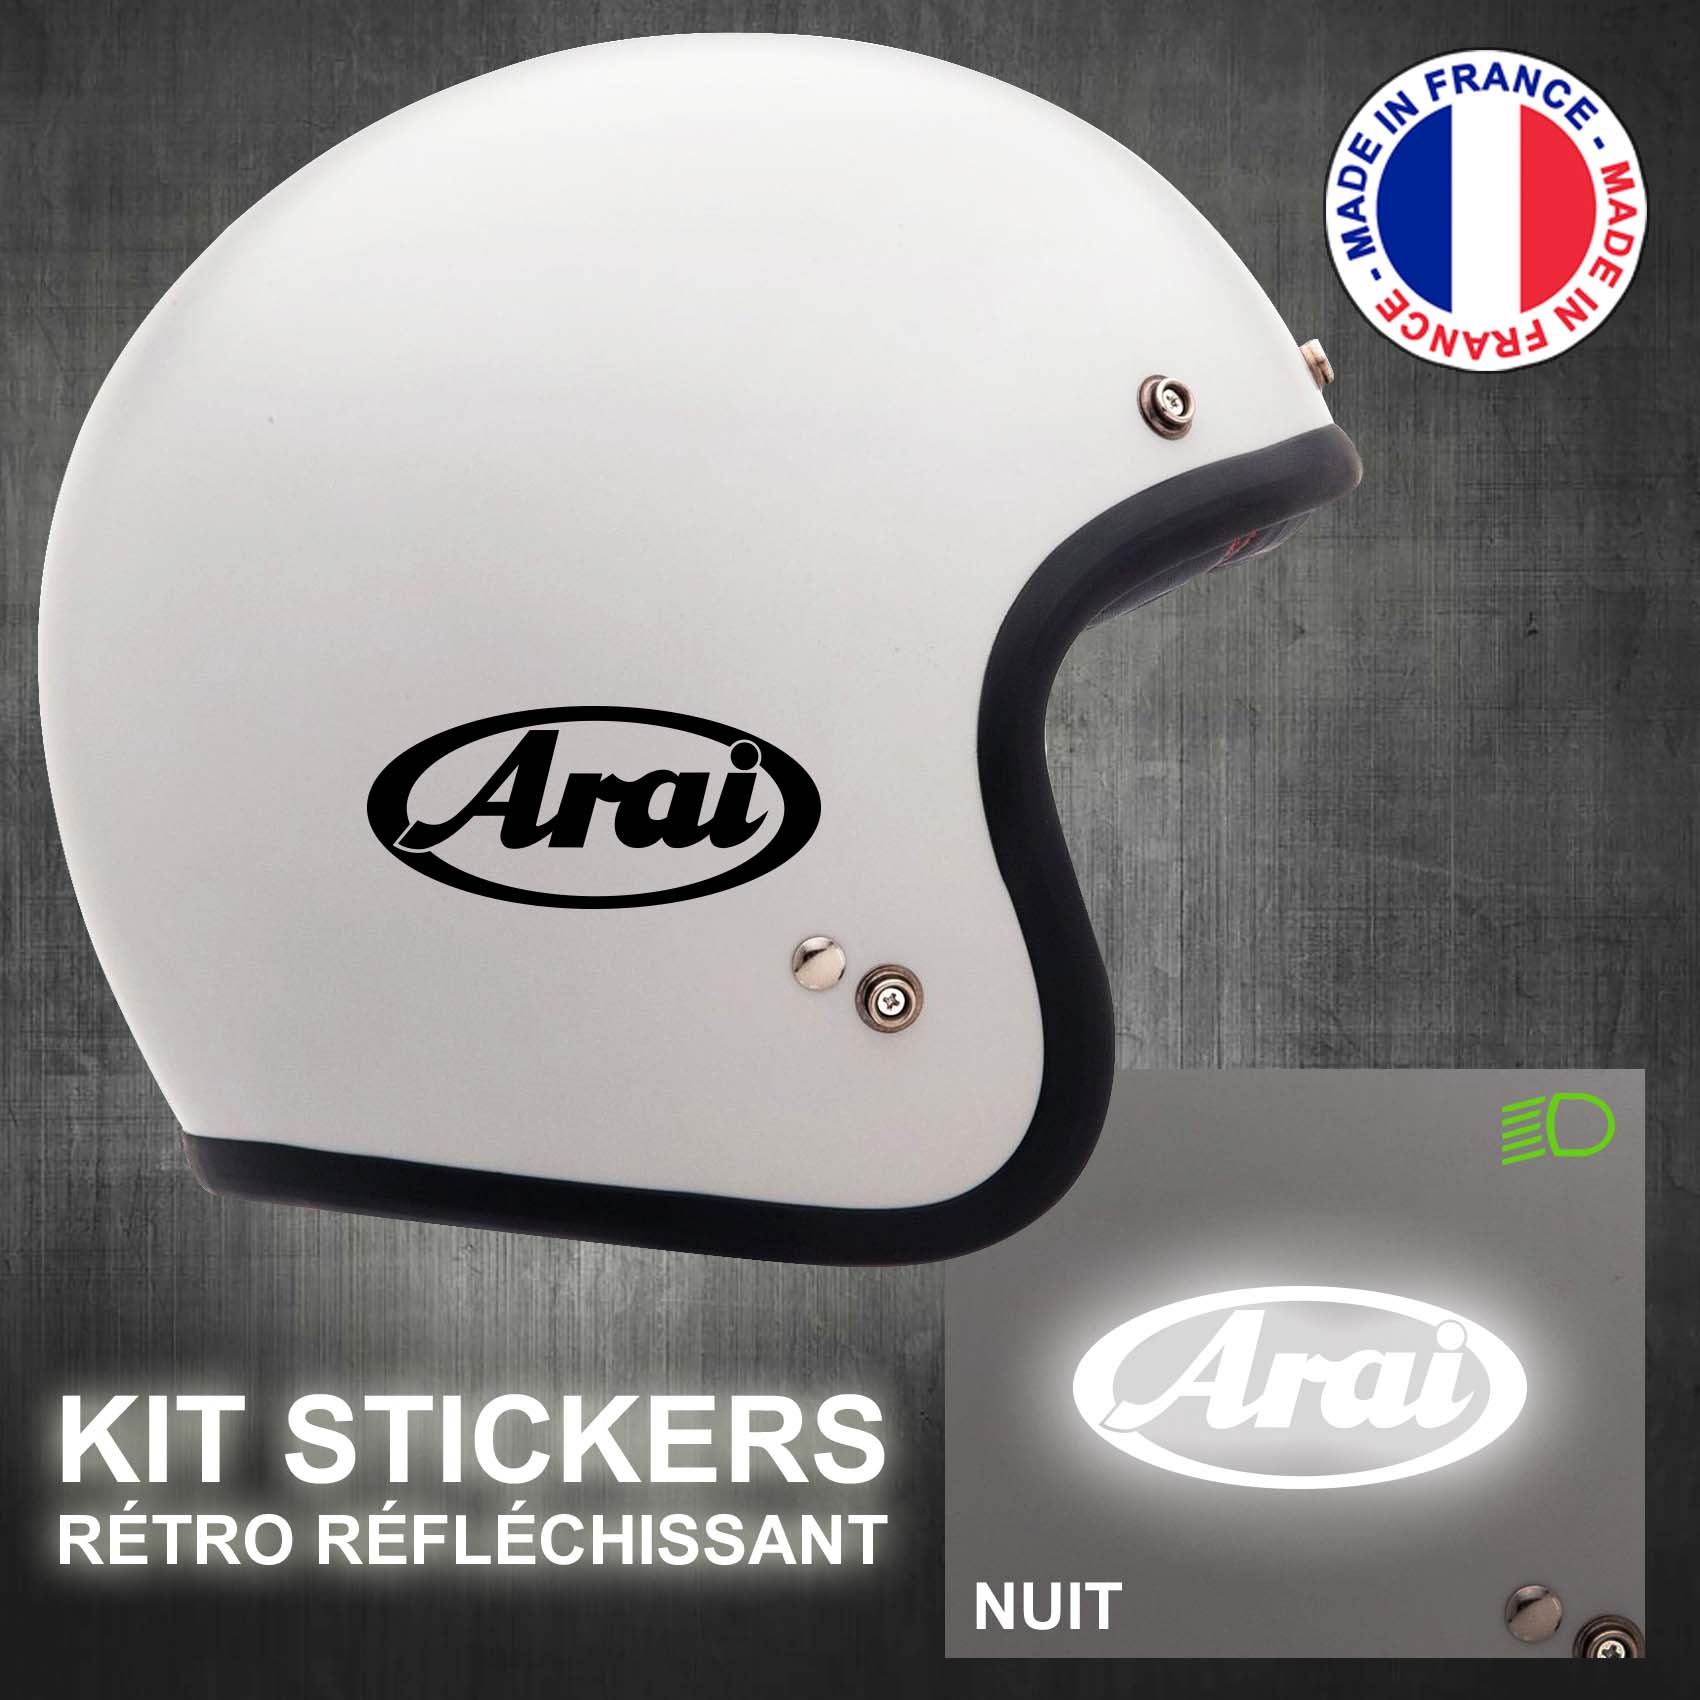 stickers-casque-moto-arai-ref1-retro-reflechissant-autocollant-moto-velo-tuning-racing-route-sticker-casques-adhesif-scooter-nuit-securite-decals-personnalise-personnalisable-min